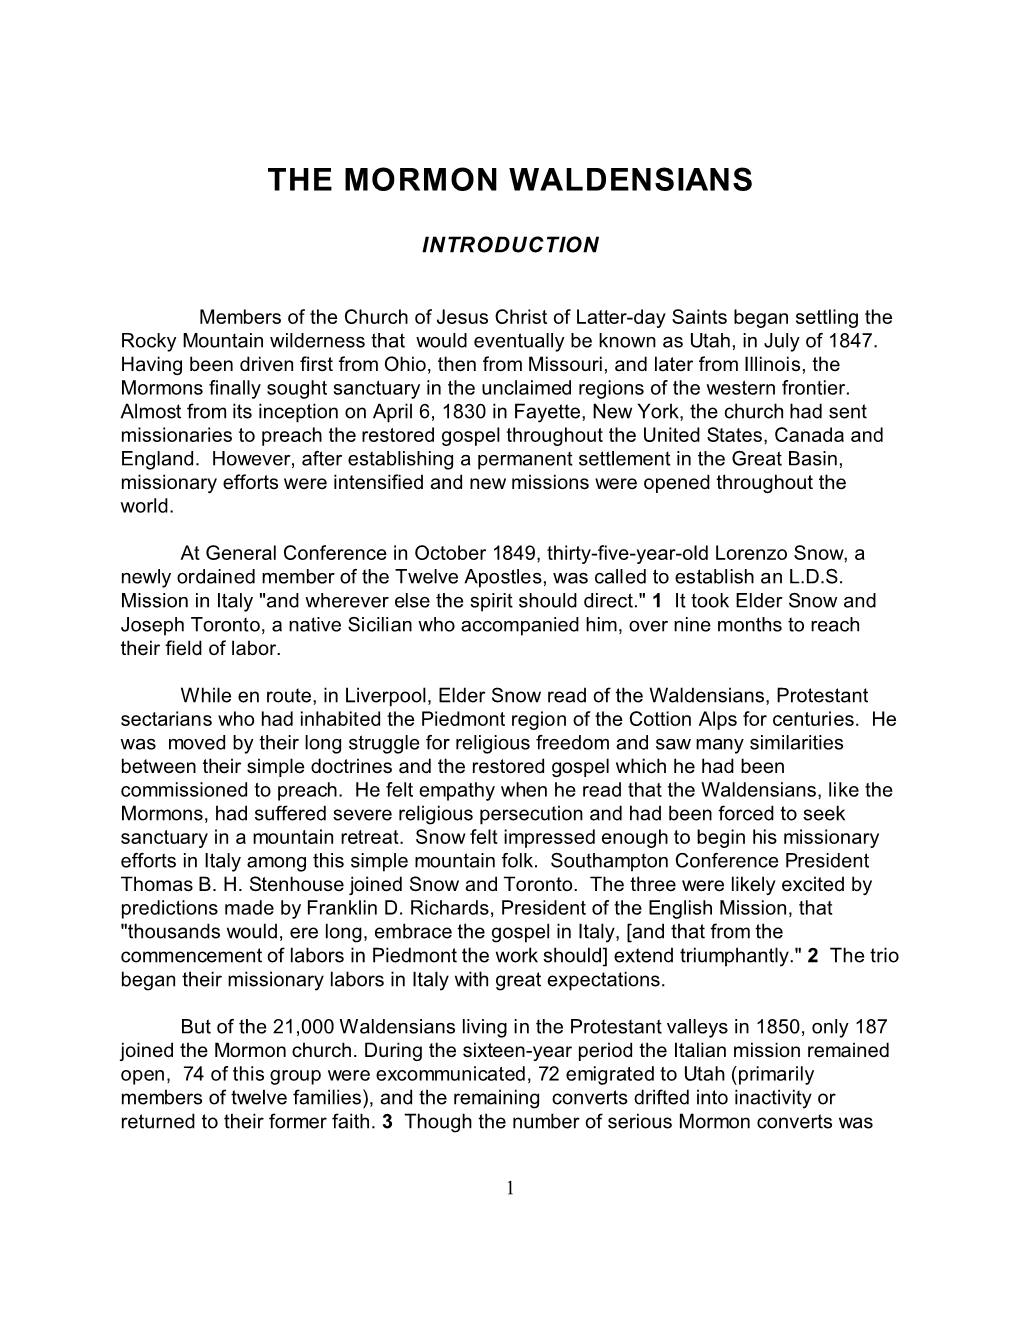 The Mormon Waldensians